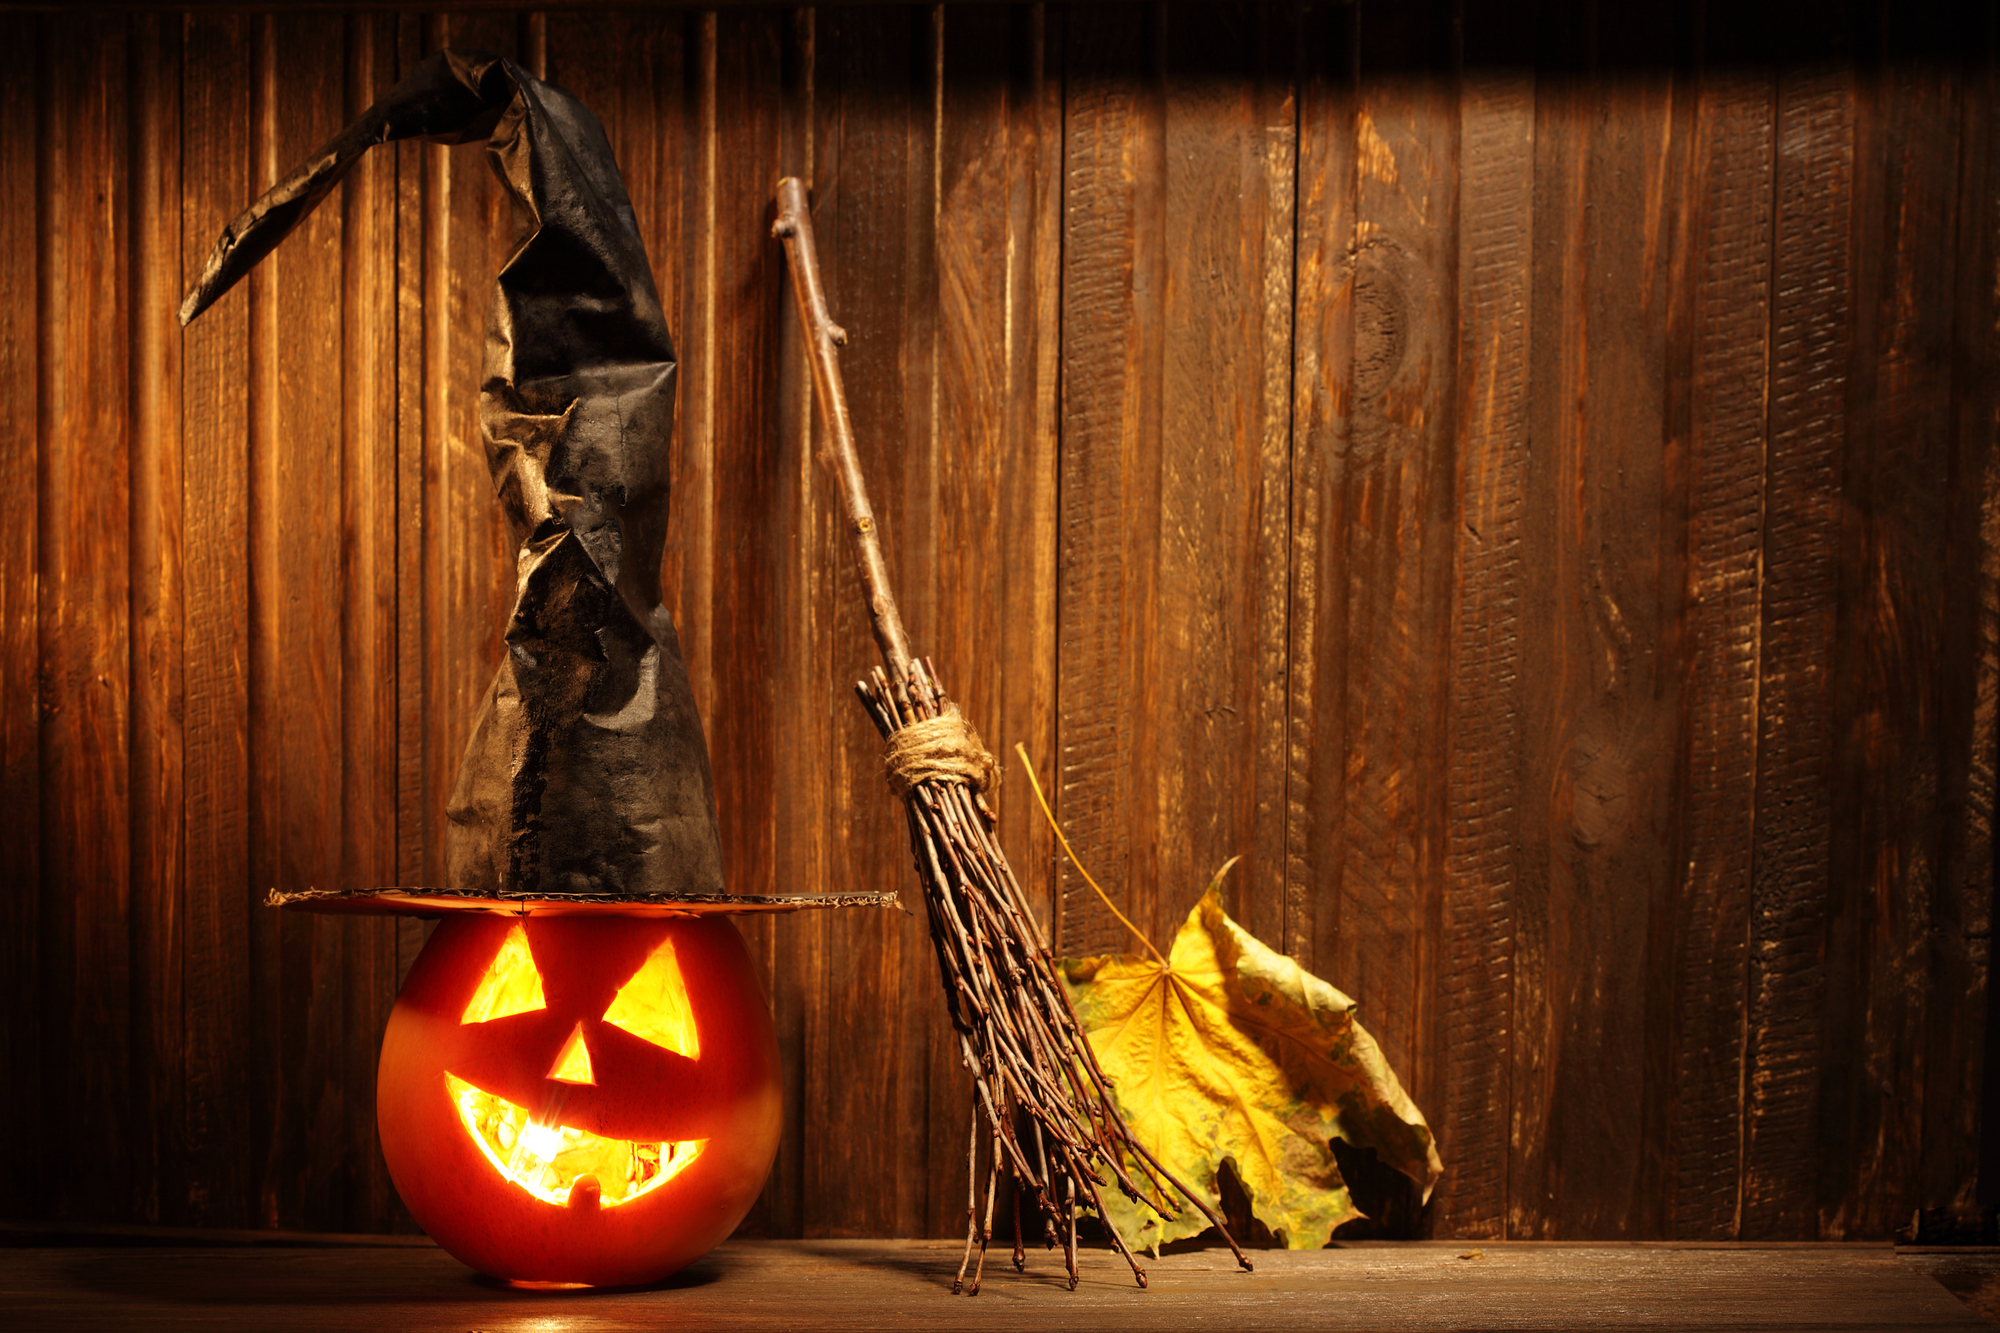 pumpkin and halloween decorations